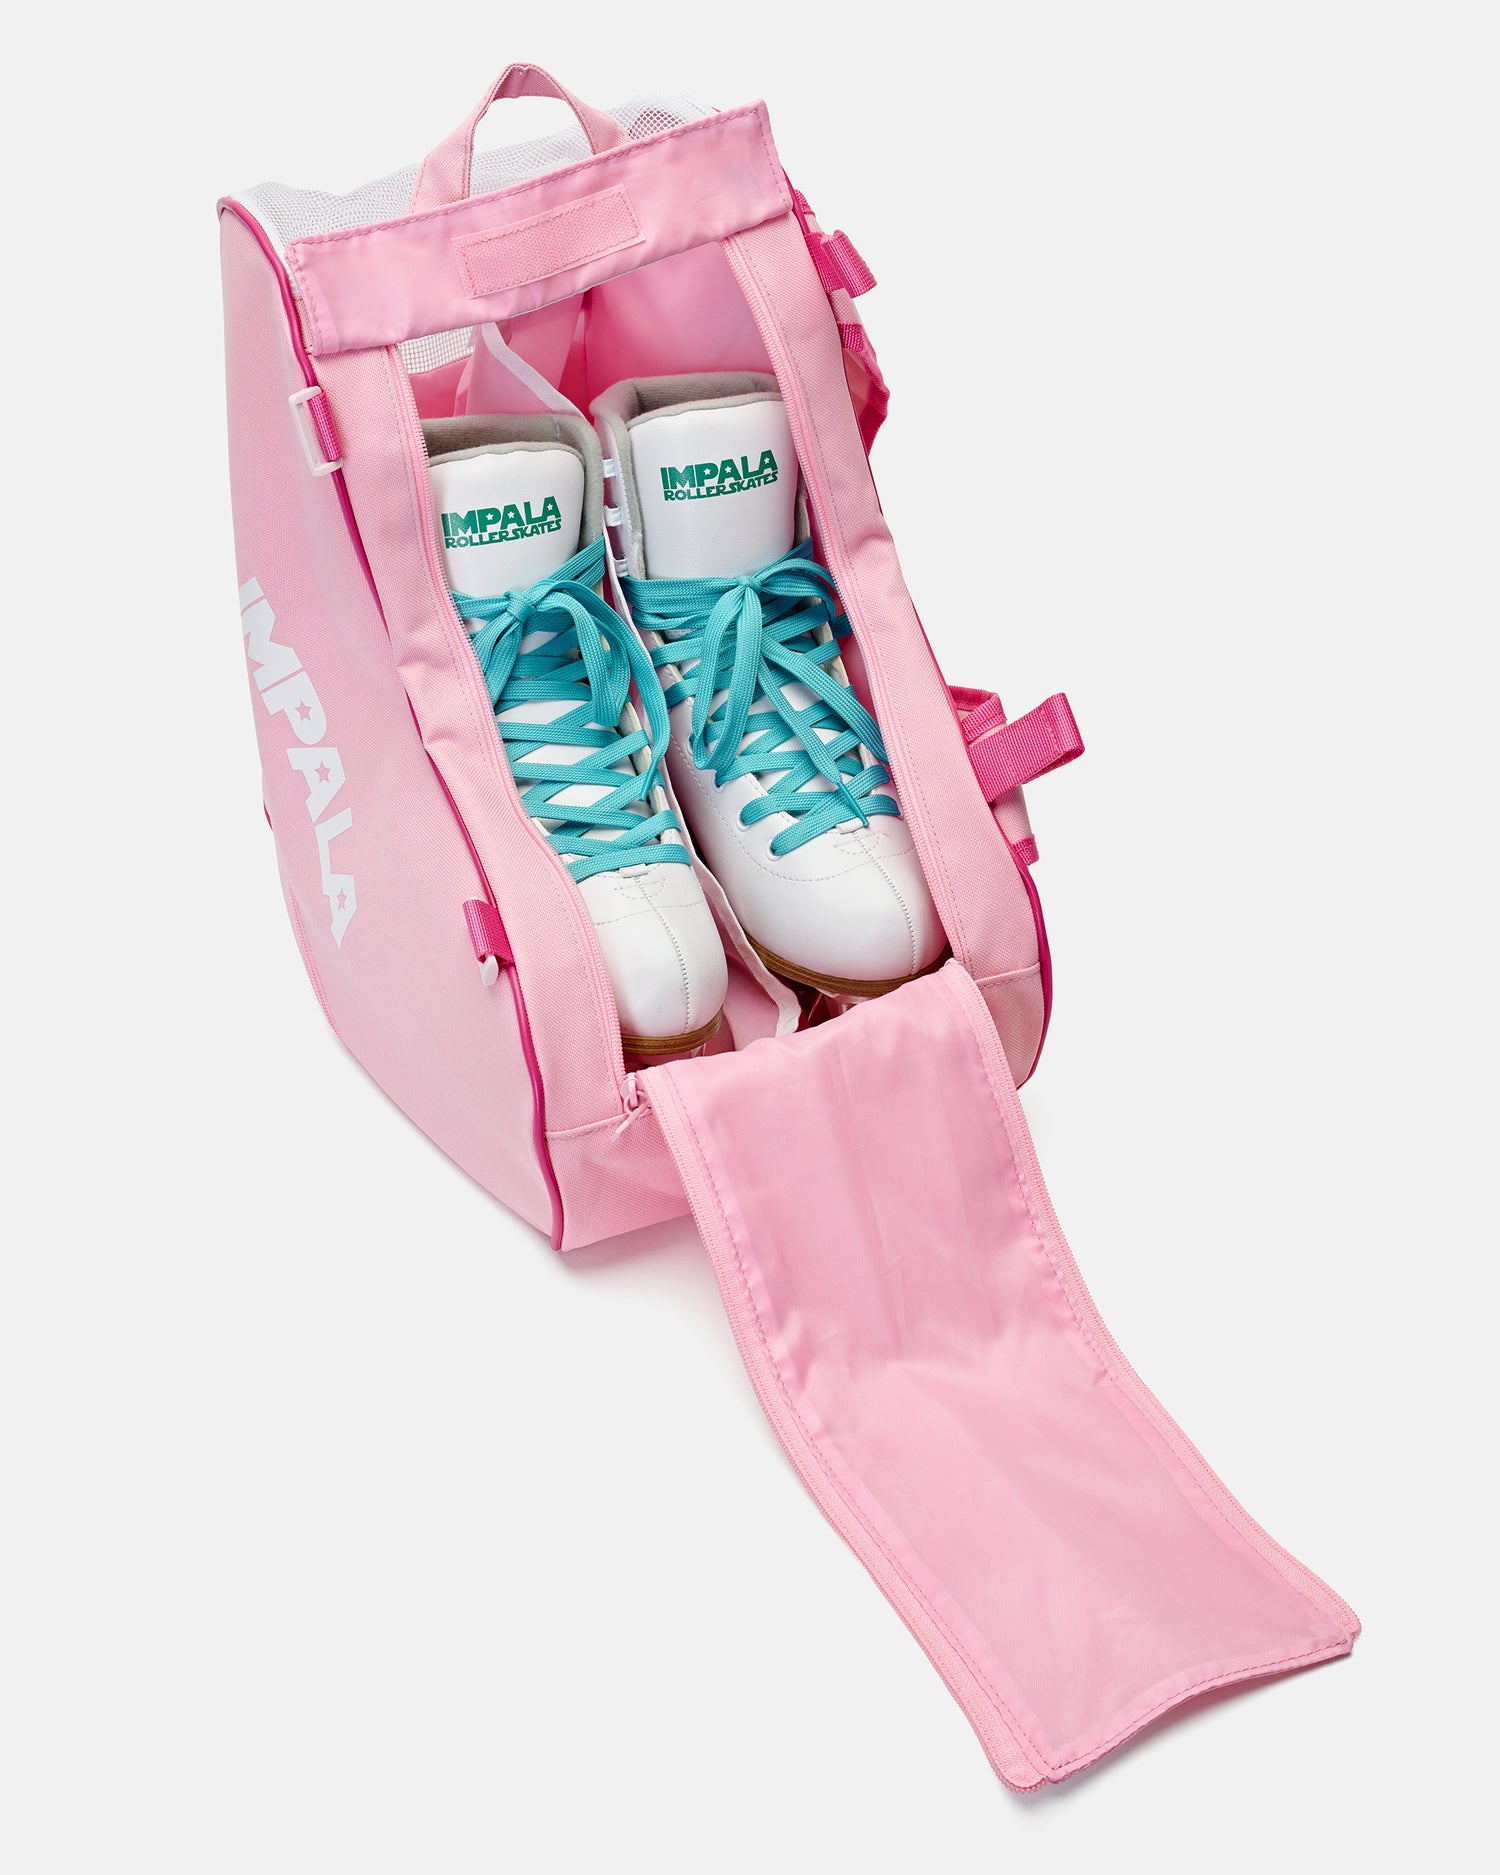 skates in Impala Skate Bag - Pink